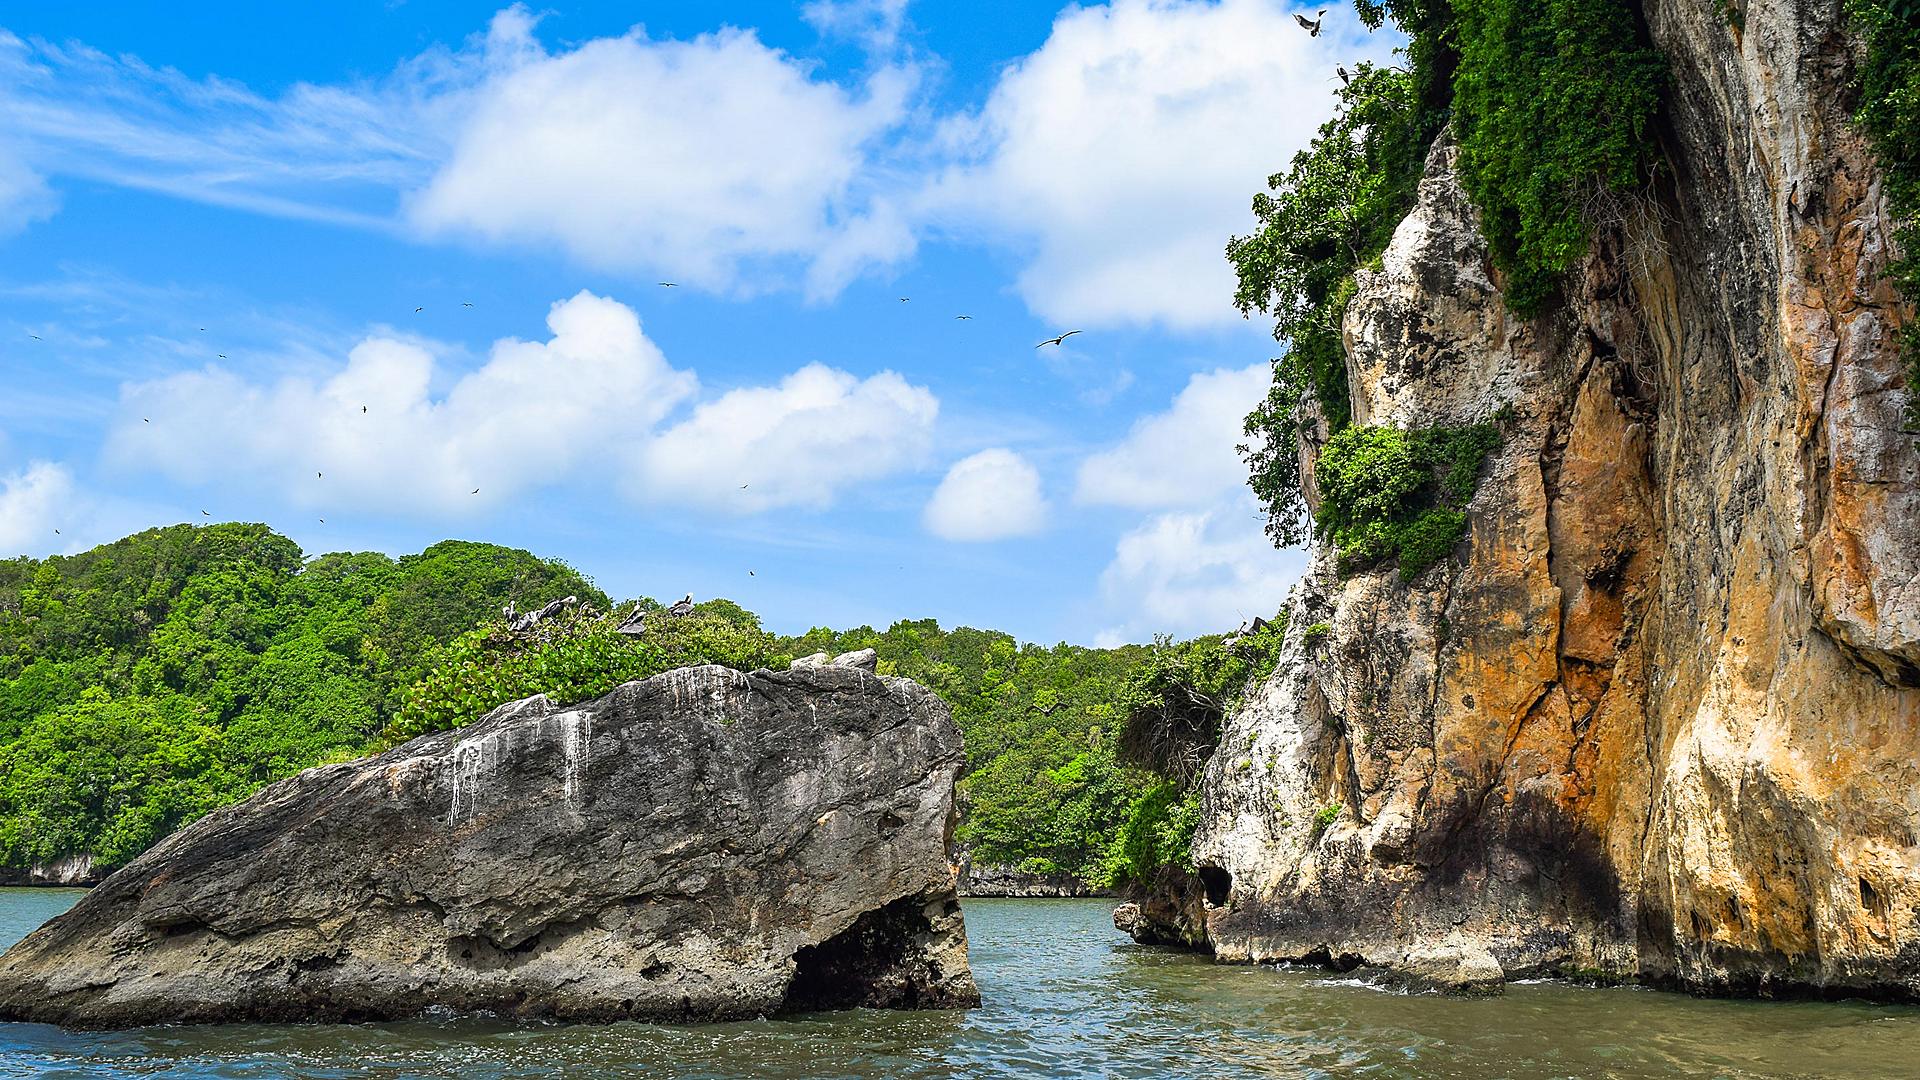 dominican-republic-pelicans-on-rock-los-haitises-national-park